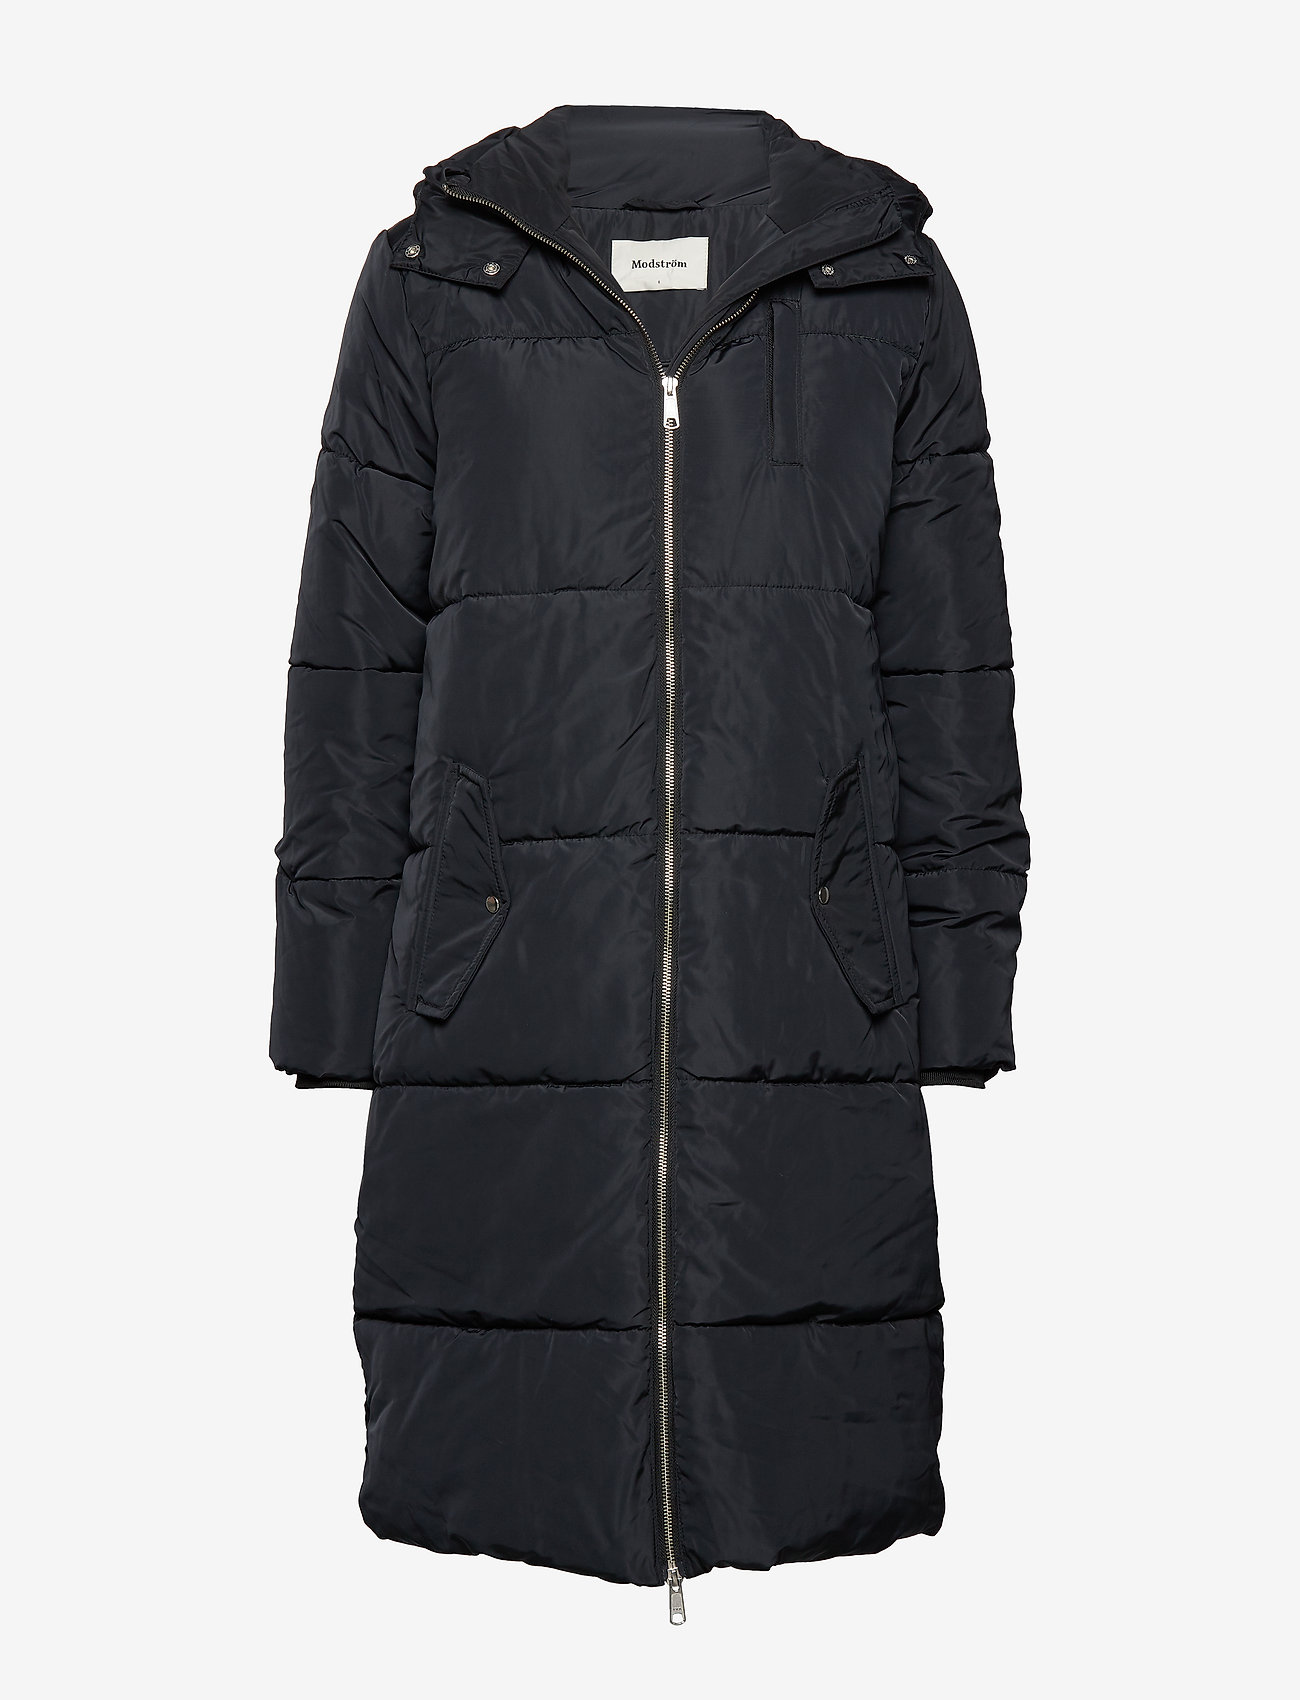 Modström - Phoebe jacket - winter coats - black - 0